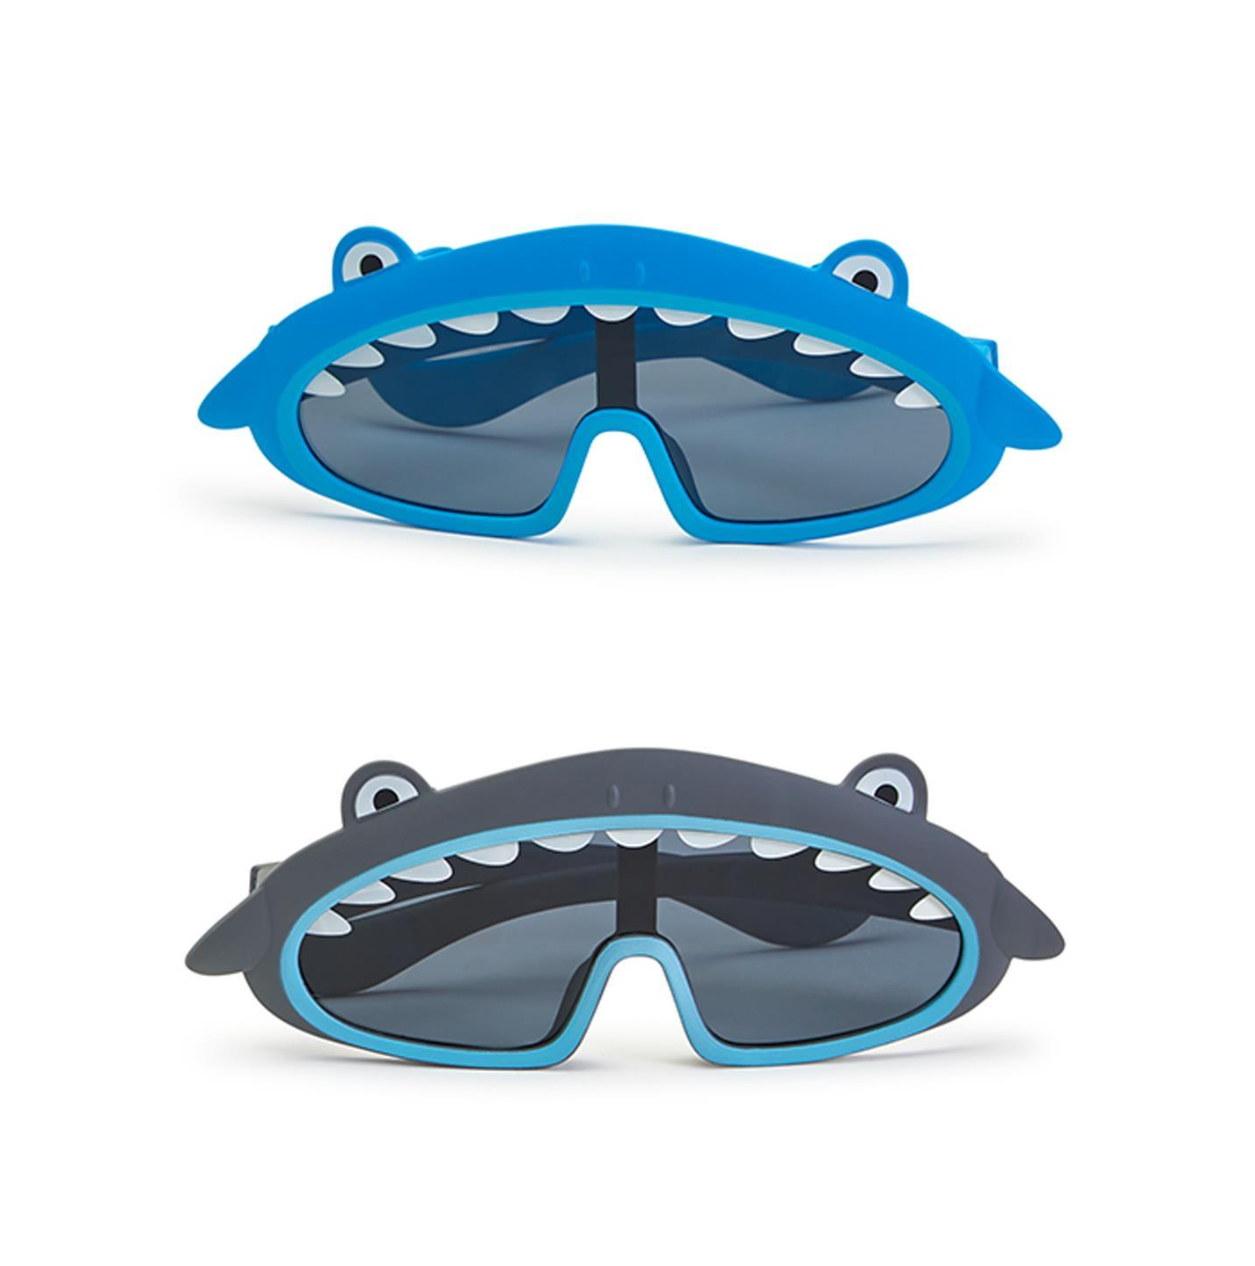 Shark Sunglasses